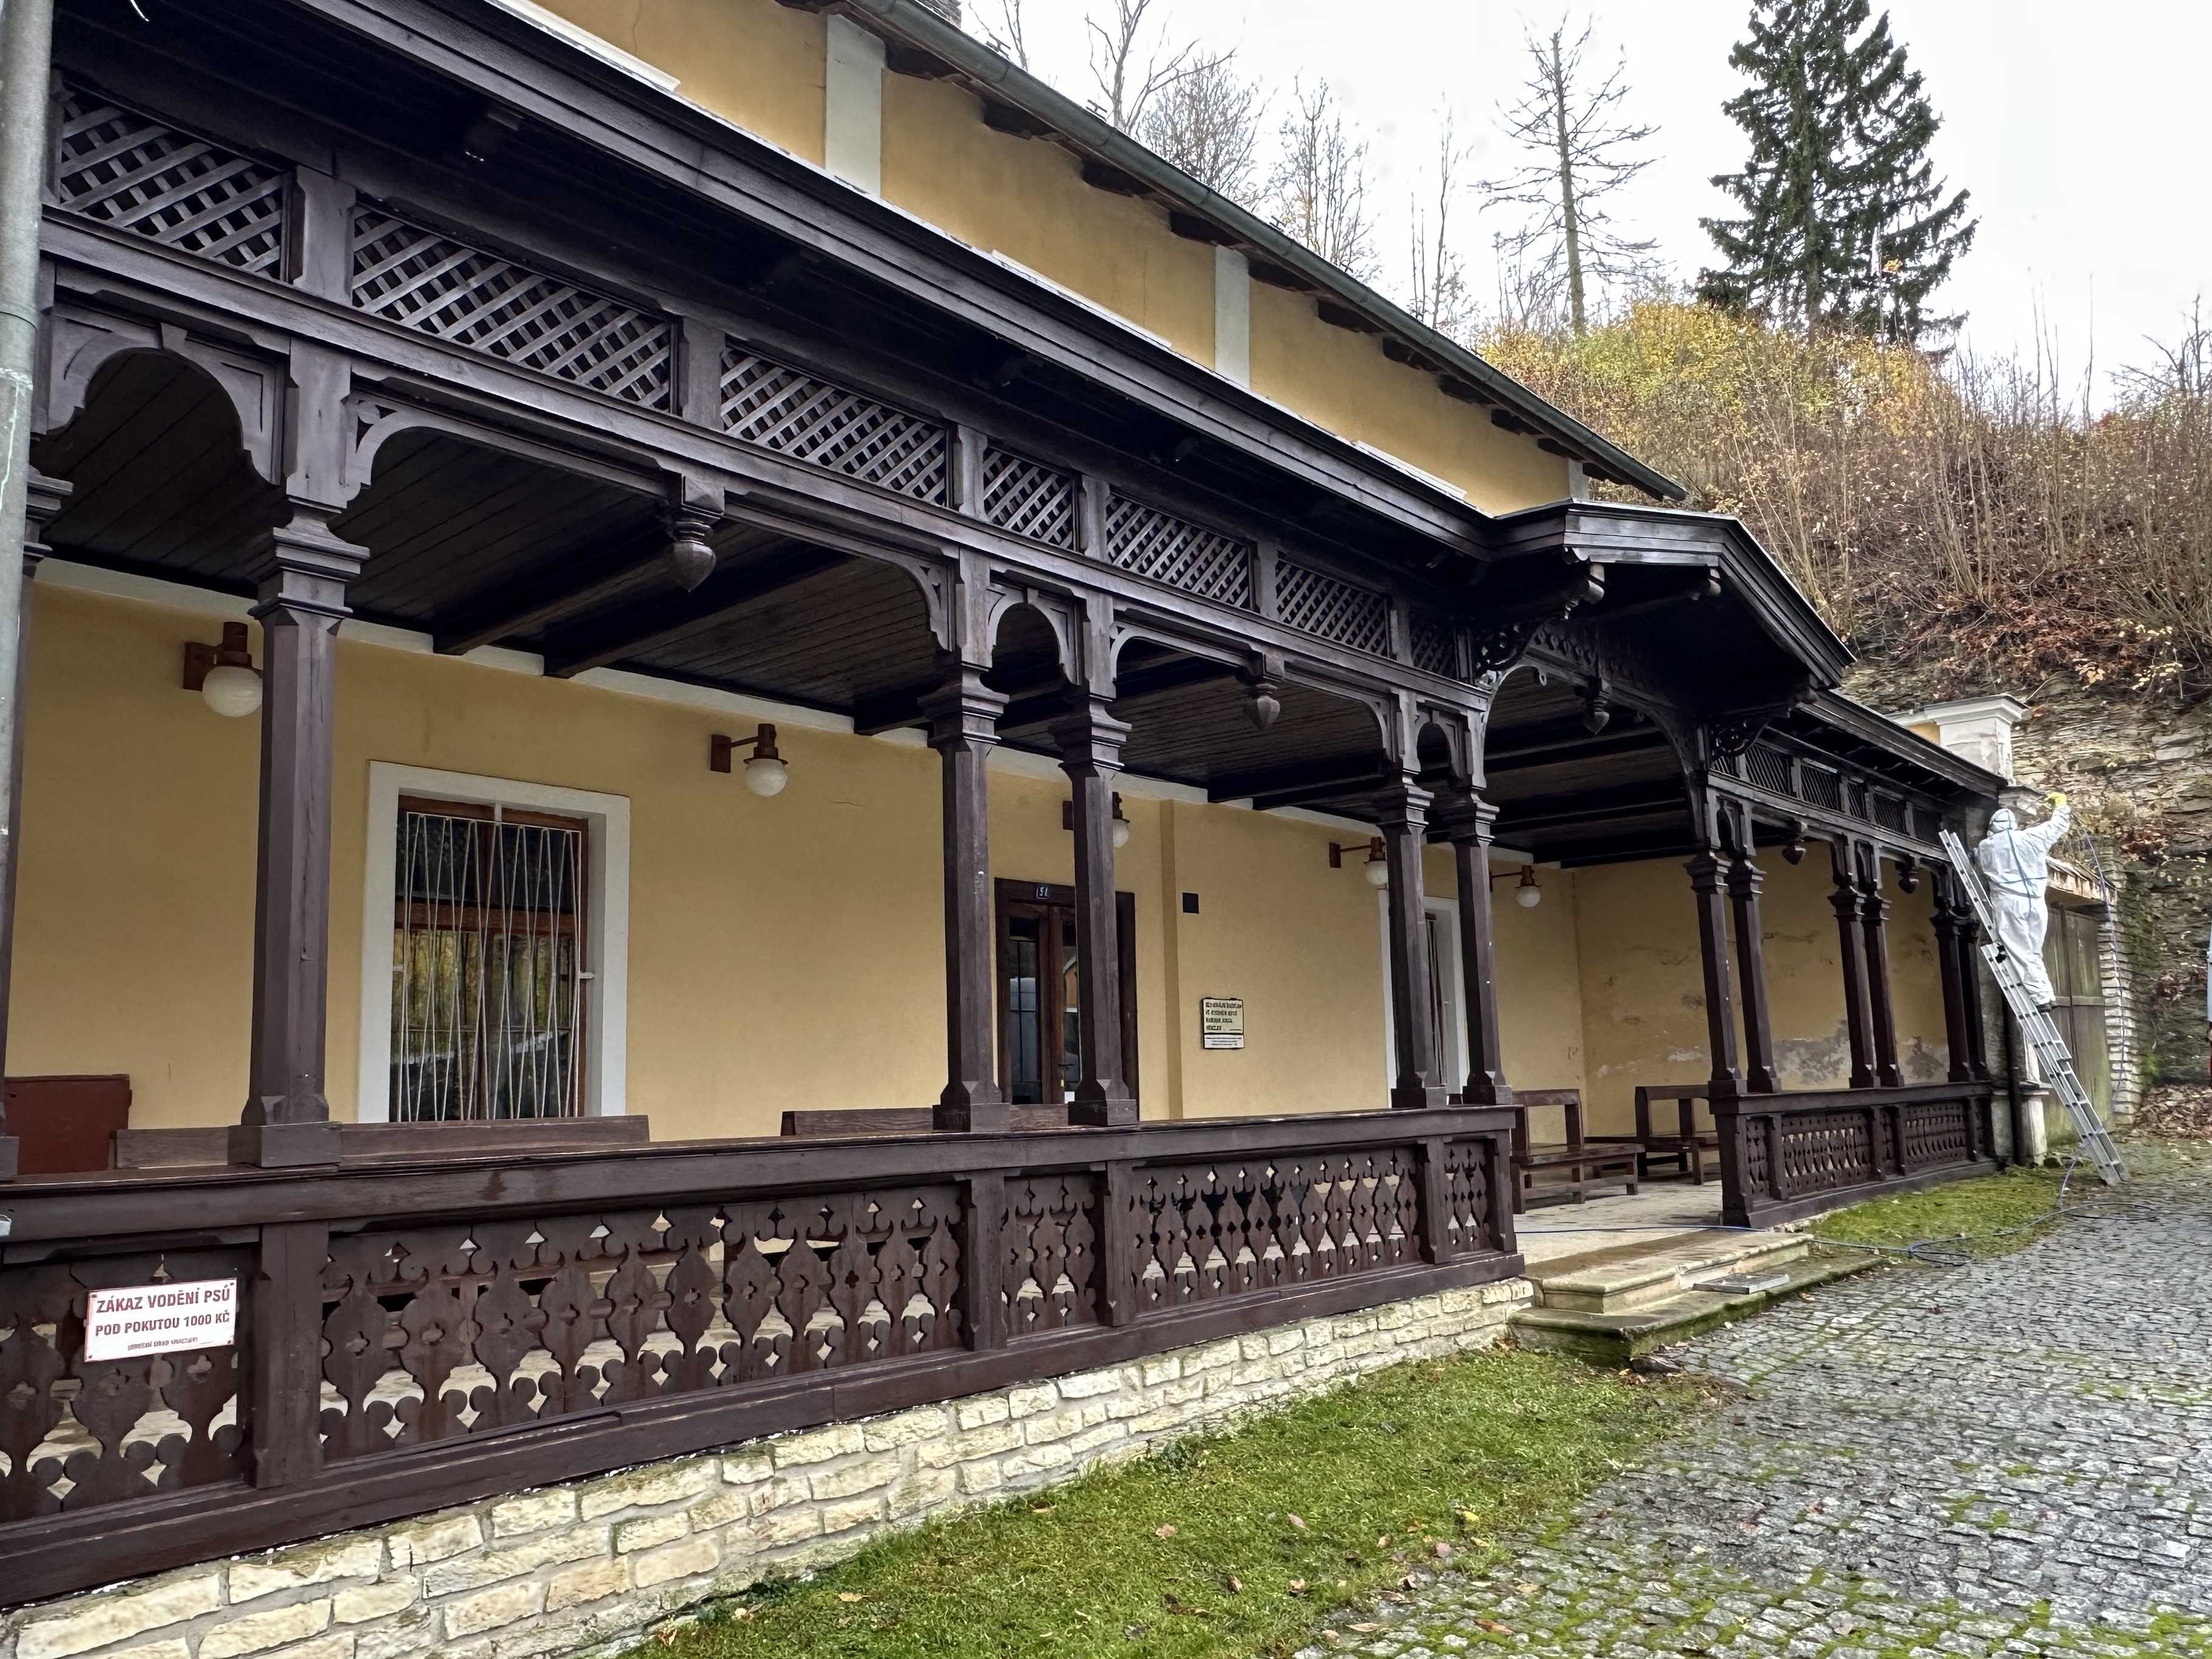 The veranda of a bathhouse in Vraclav